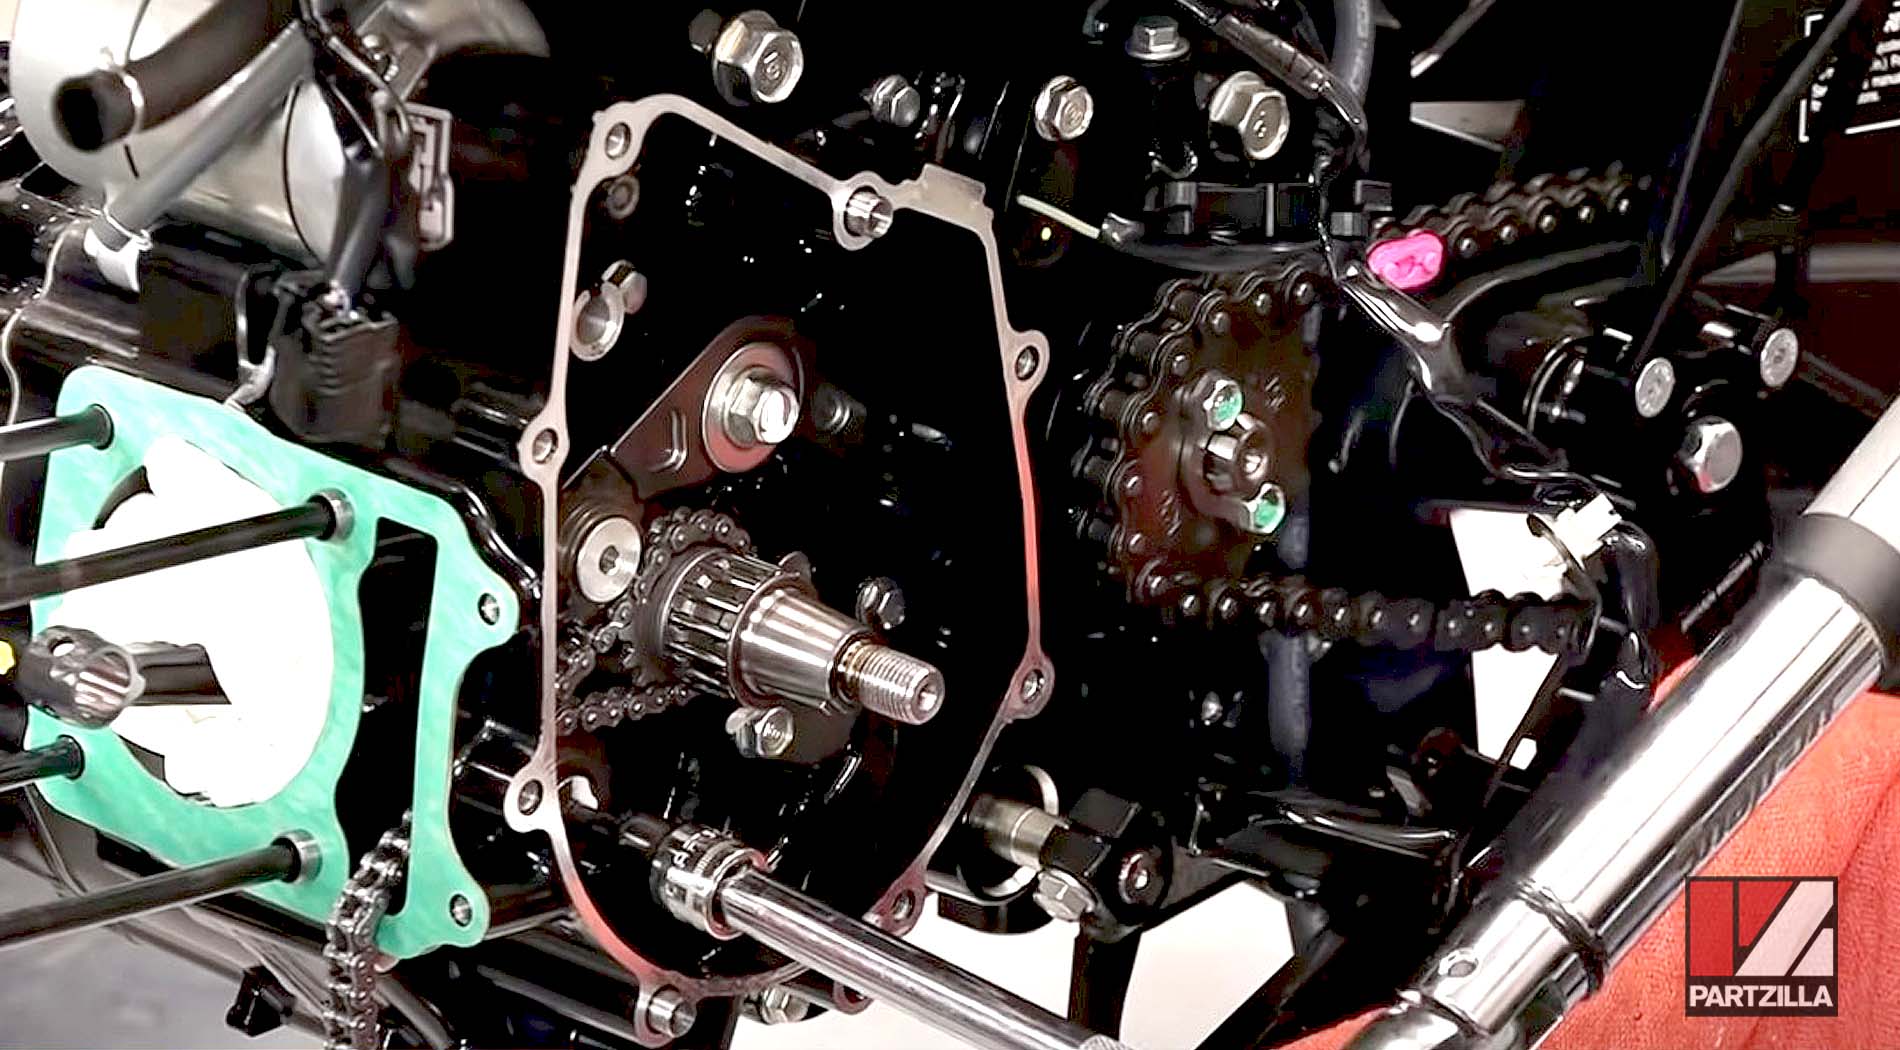 2018 Honda Grom big bore kit installation cam chain tensioner upgrade